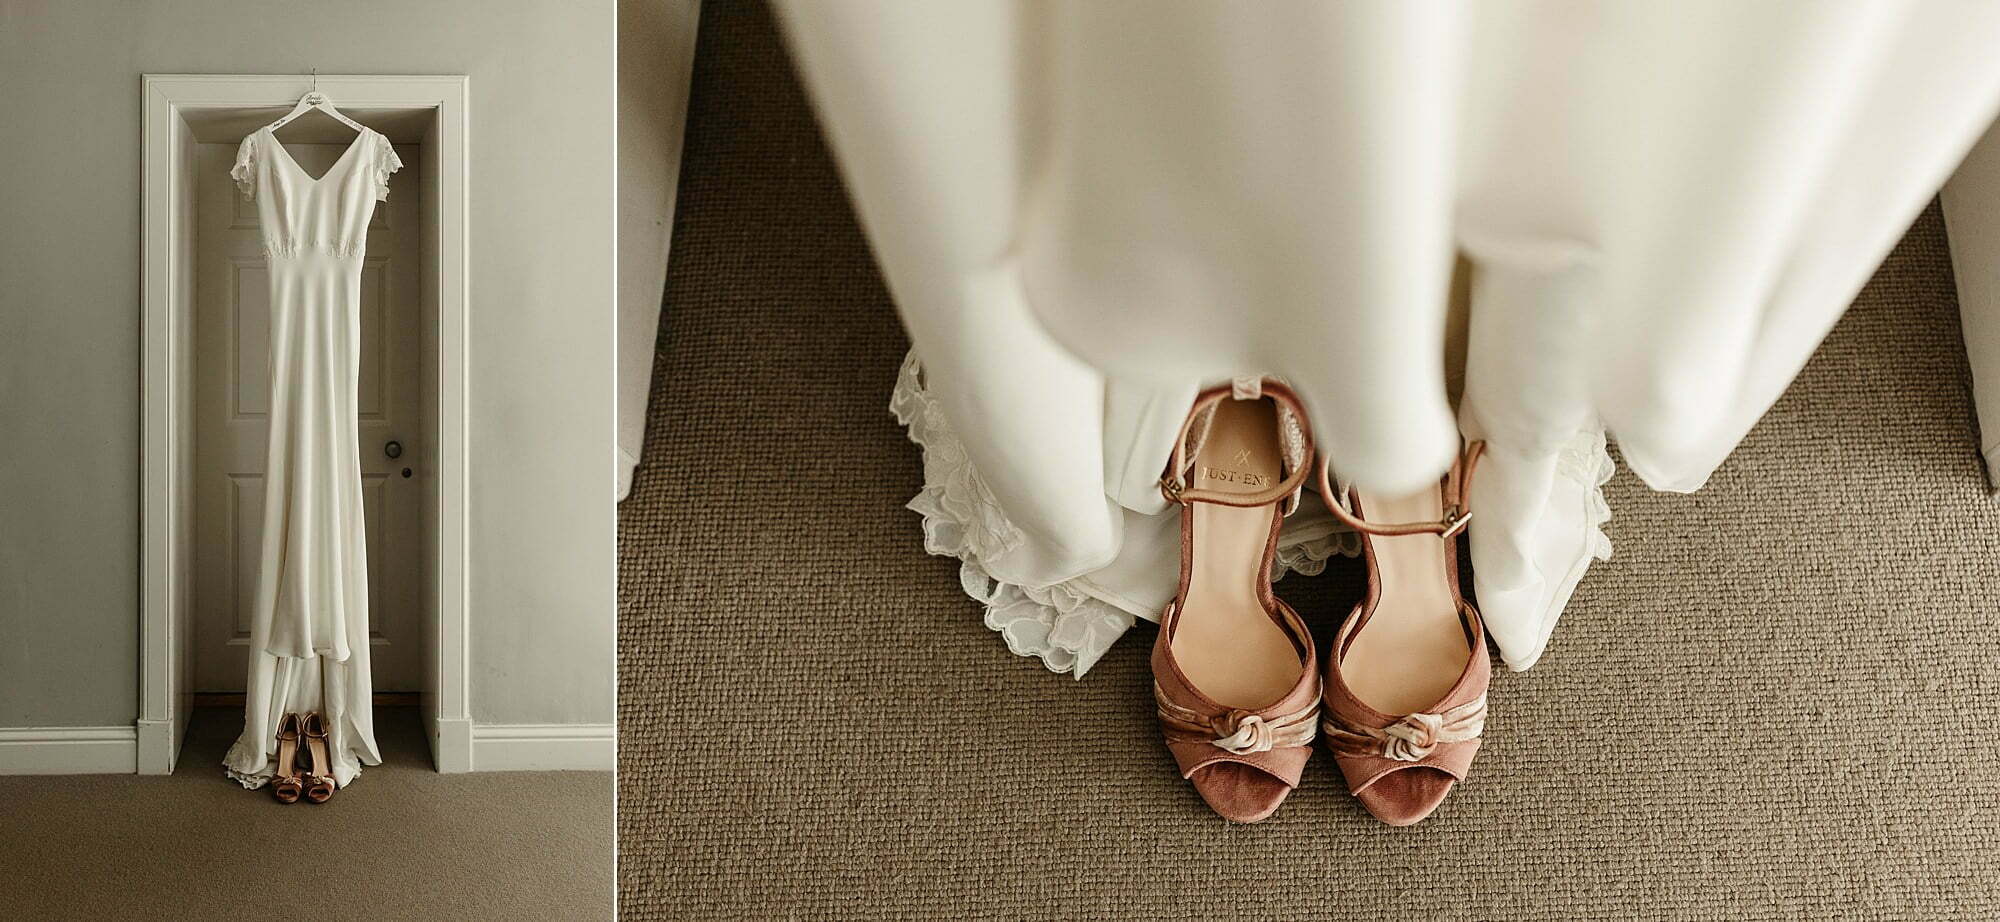 edinburgh botanic garden micro wedding flossy & dossy wedding dress bridal shoes